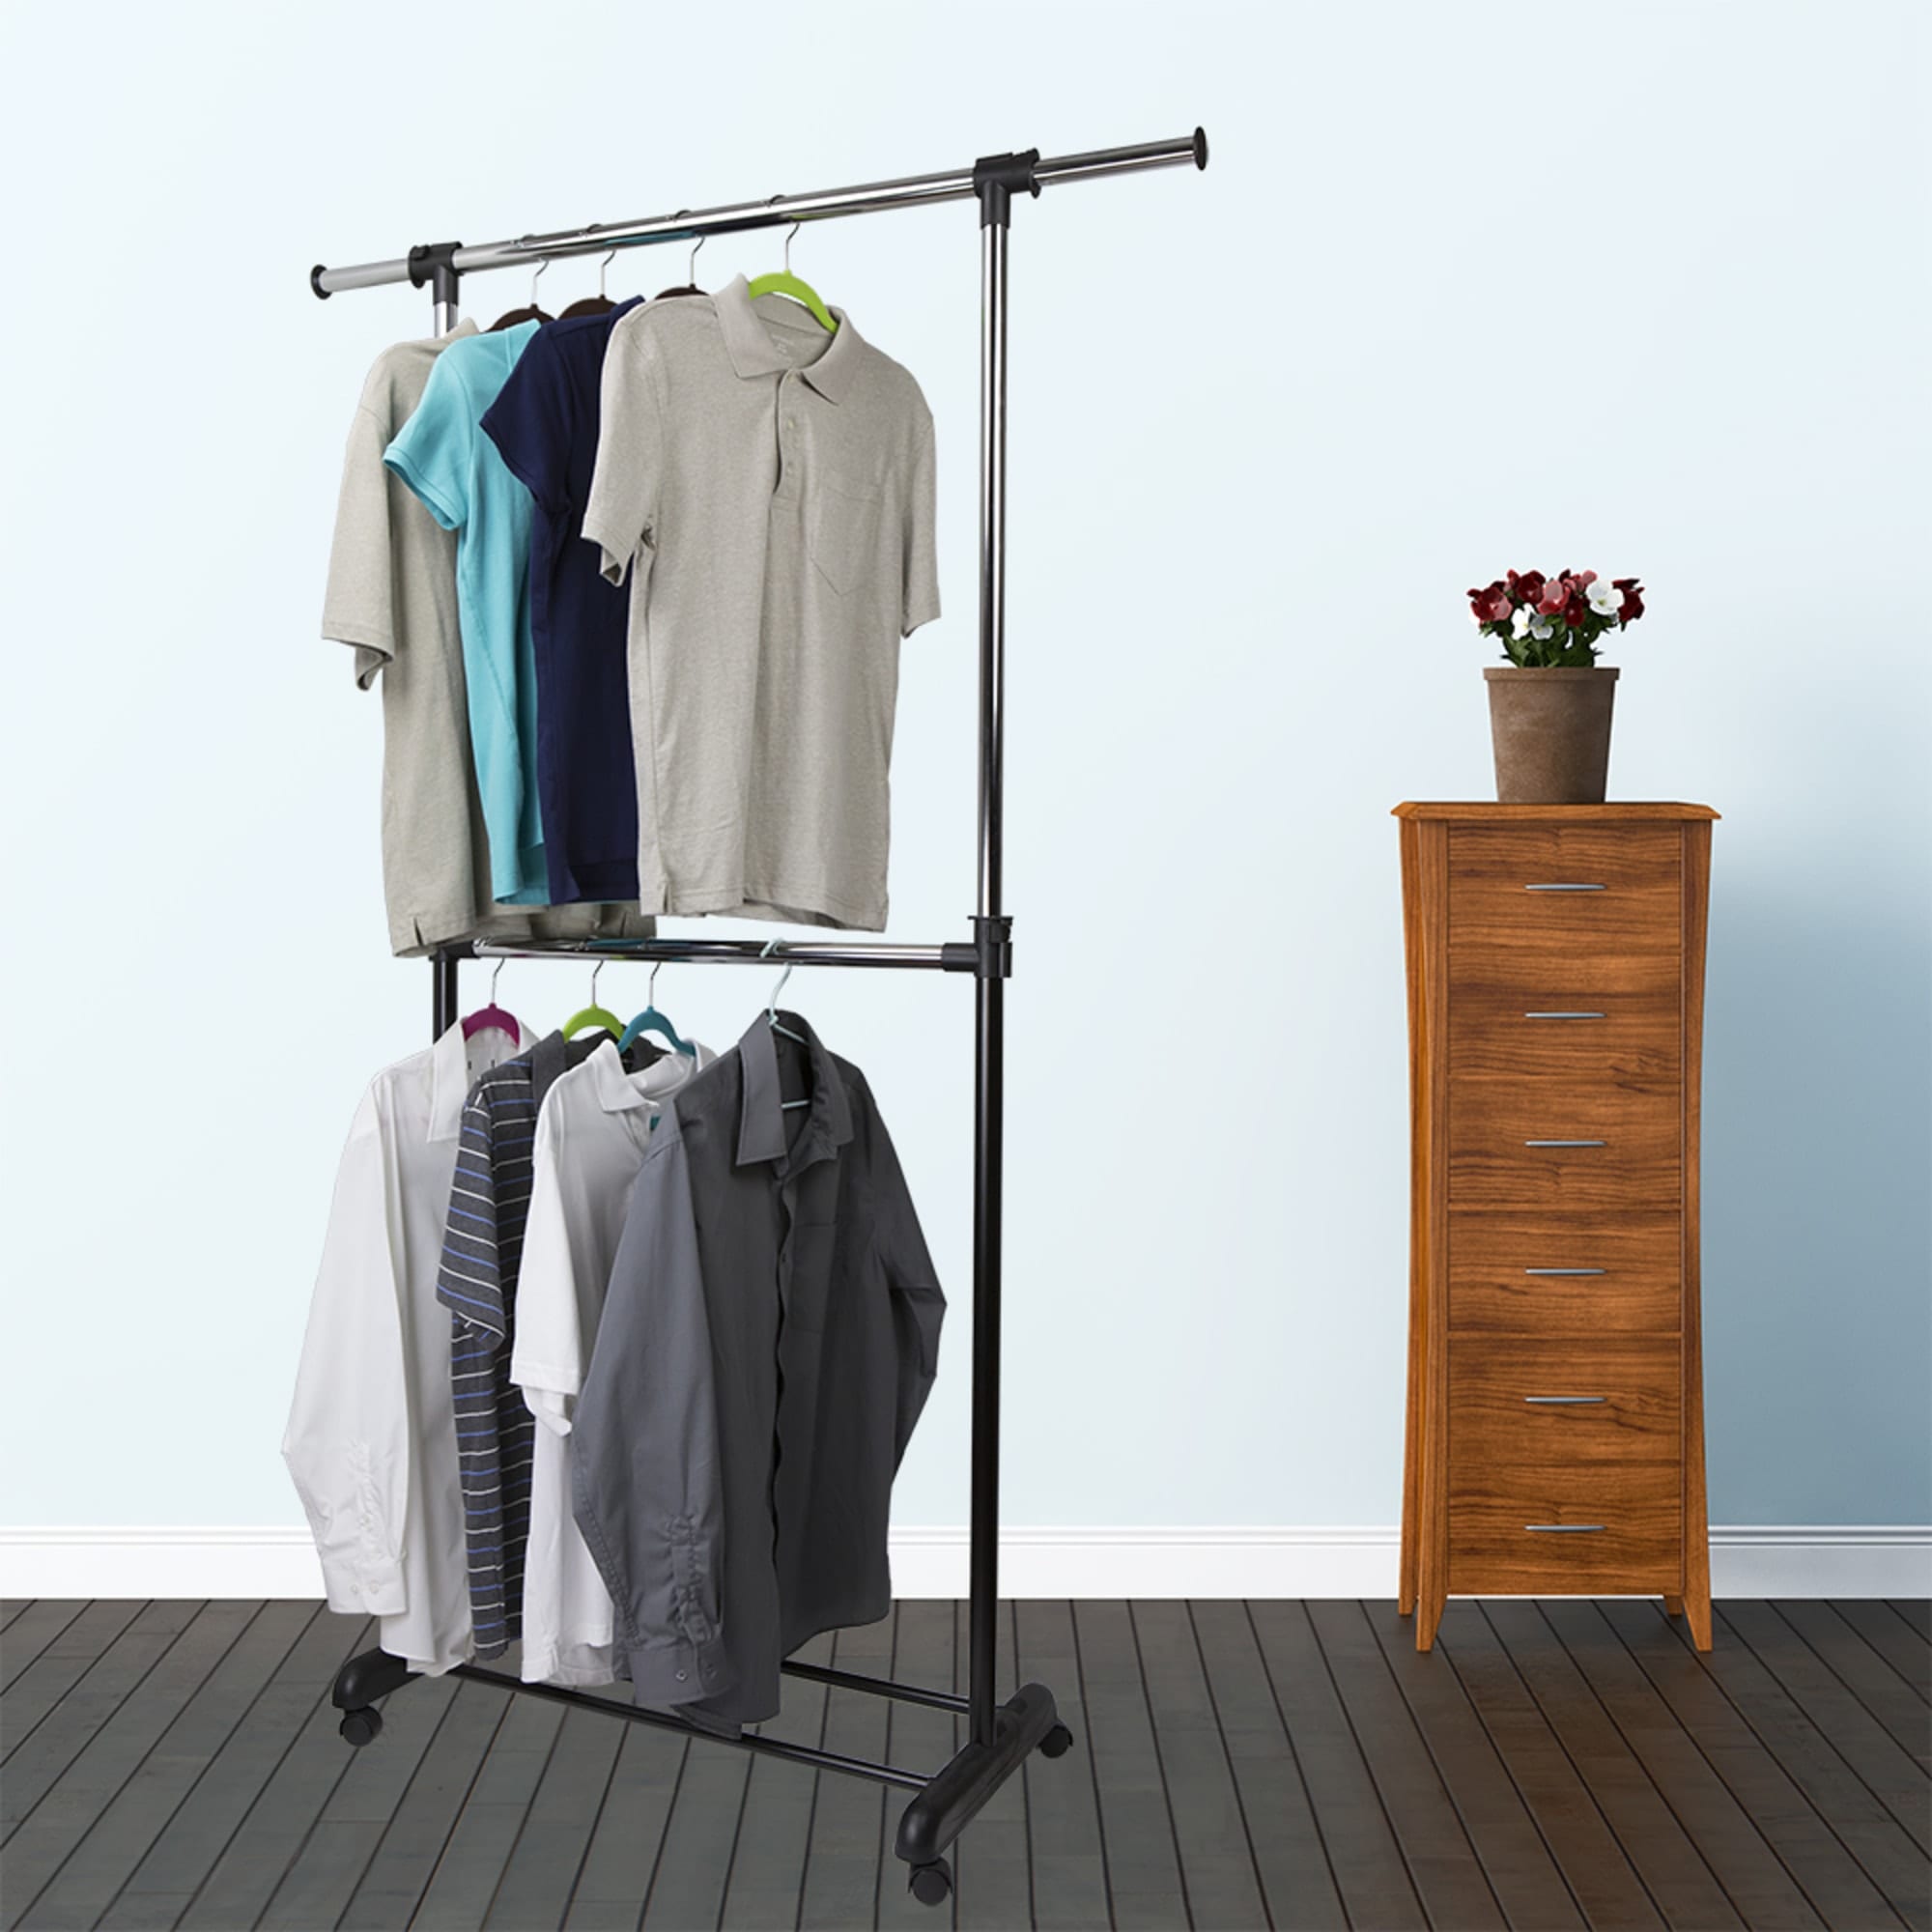 Home Basics 2 Tier Expandable Garment Rack, Black $20.00 EACH, CASE PACK OF 6